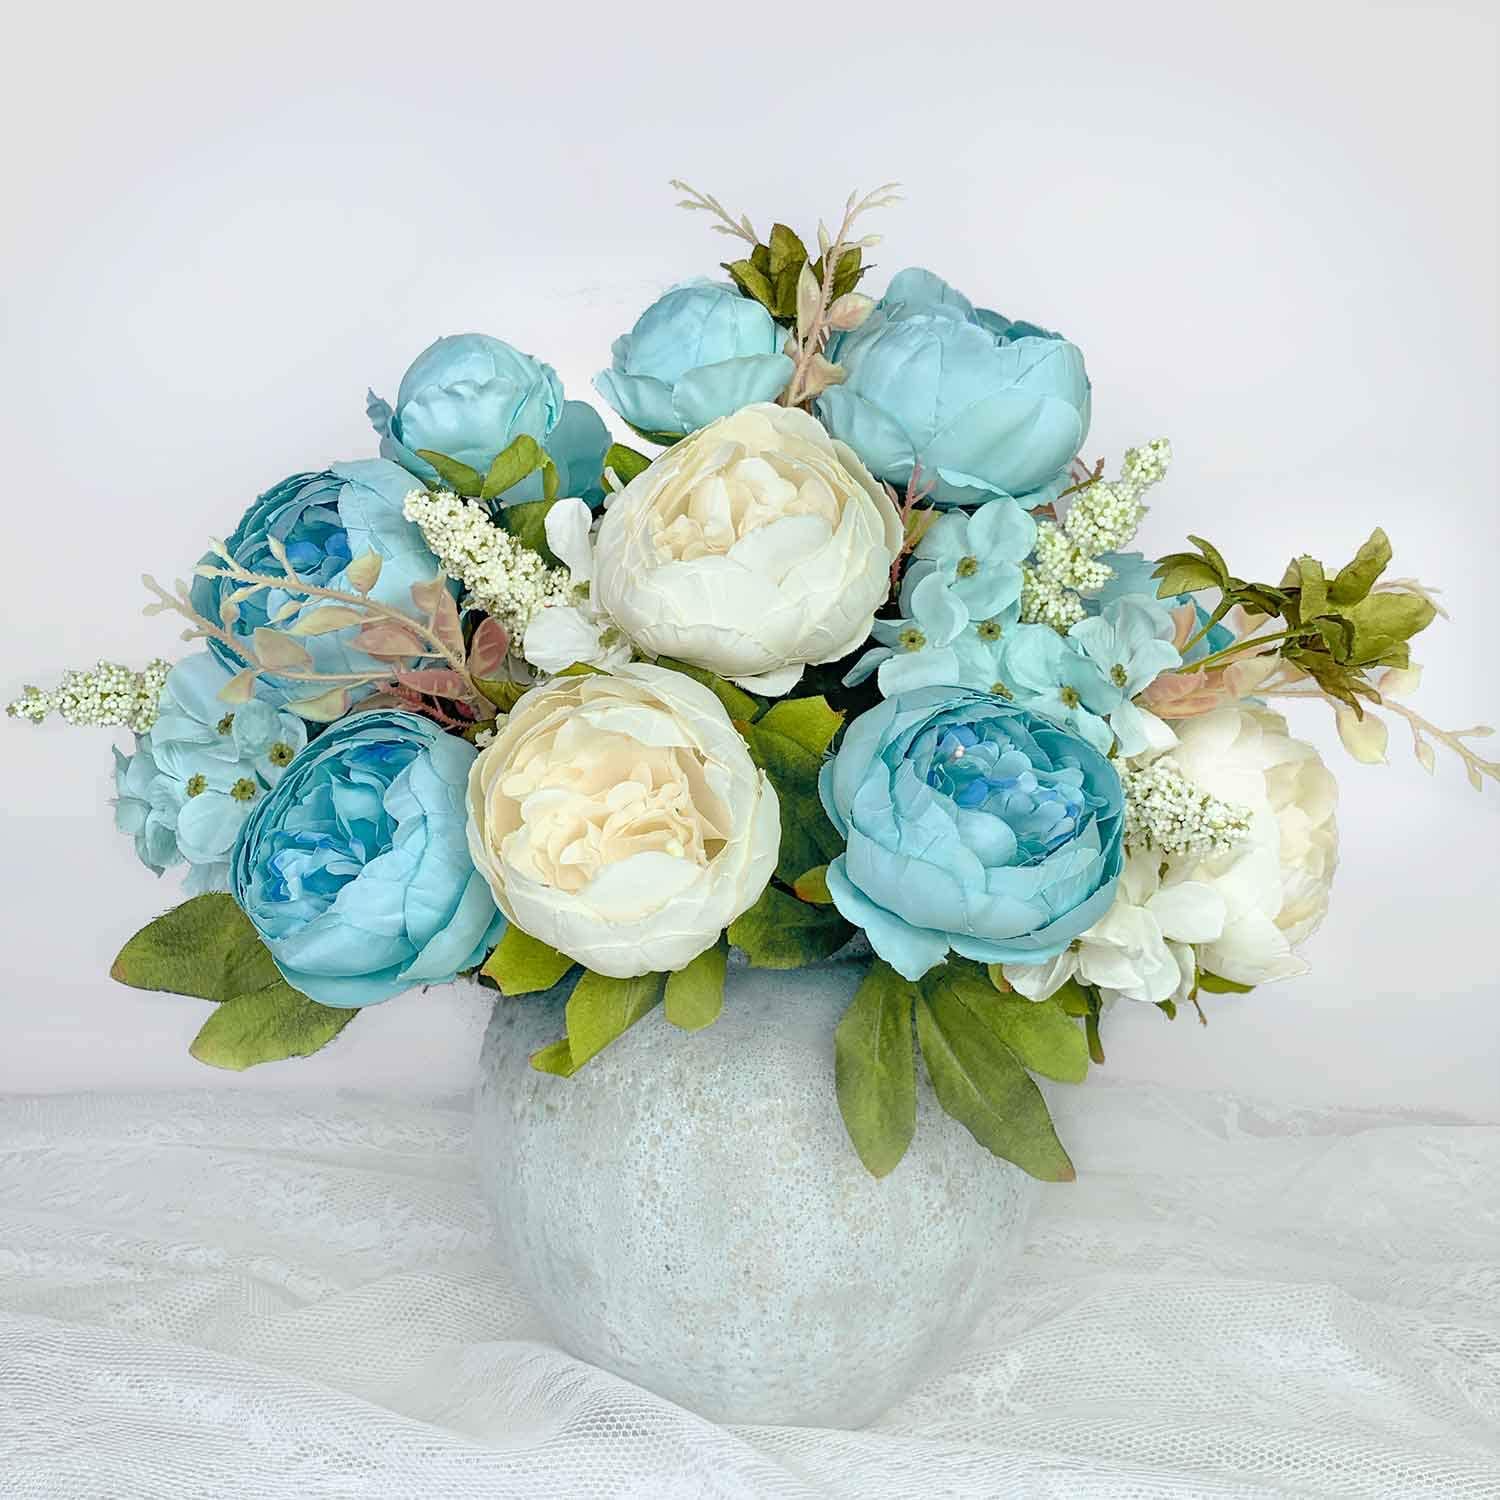 Budget Silk Wedding Flowers - Budget Friendly and Beautiful Options